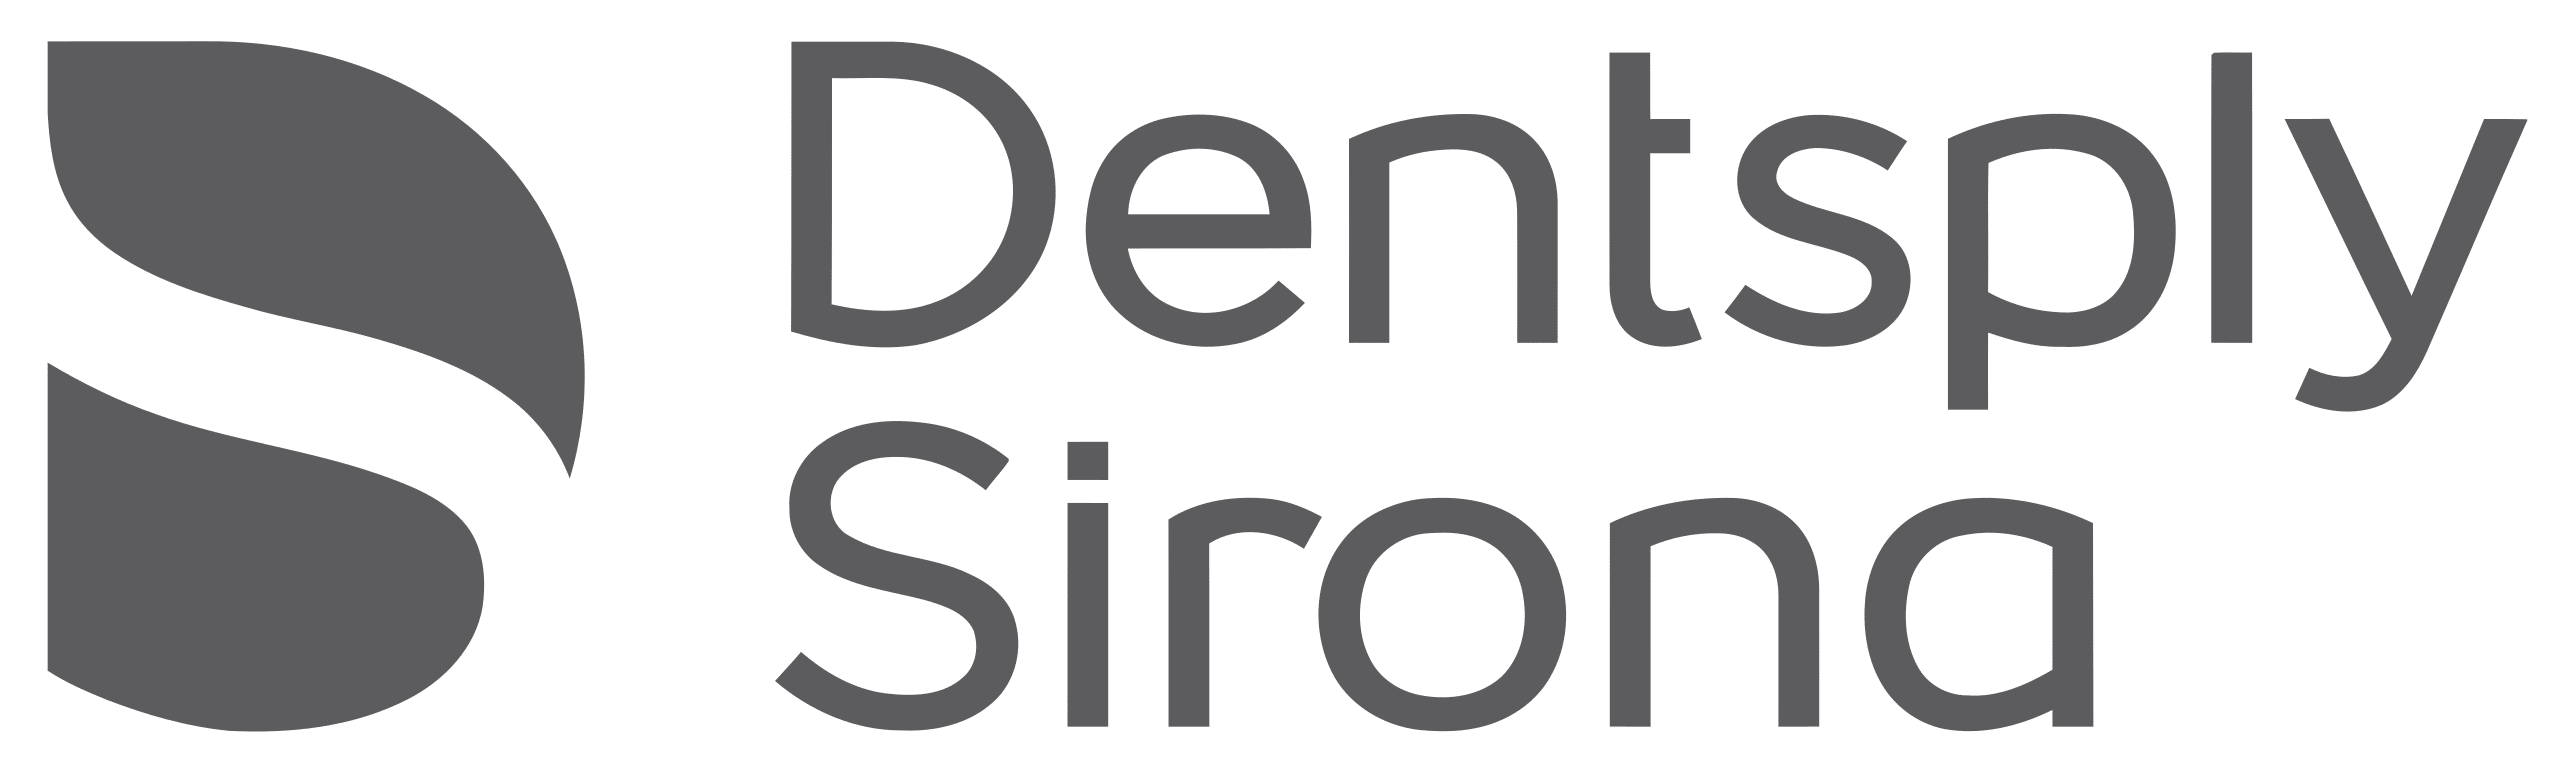 Dentsply sirona logo.svg